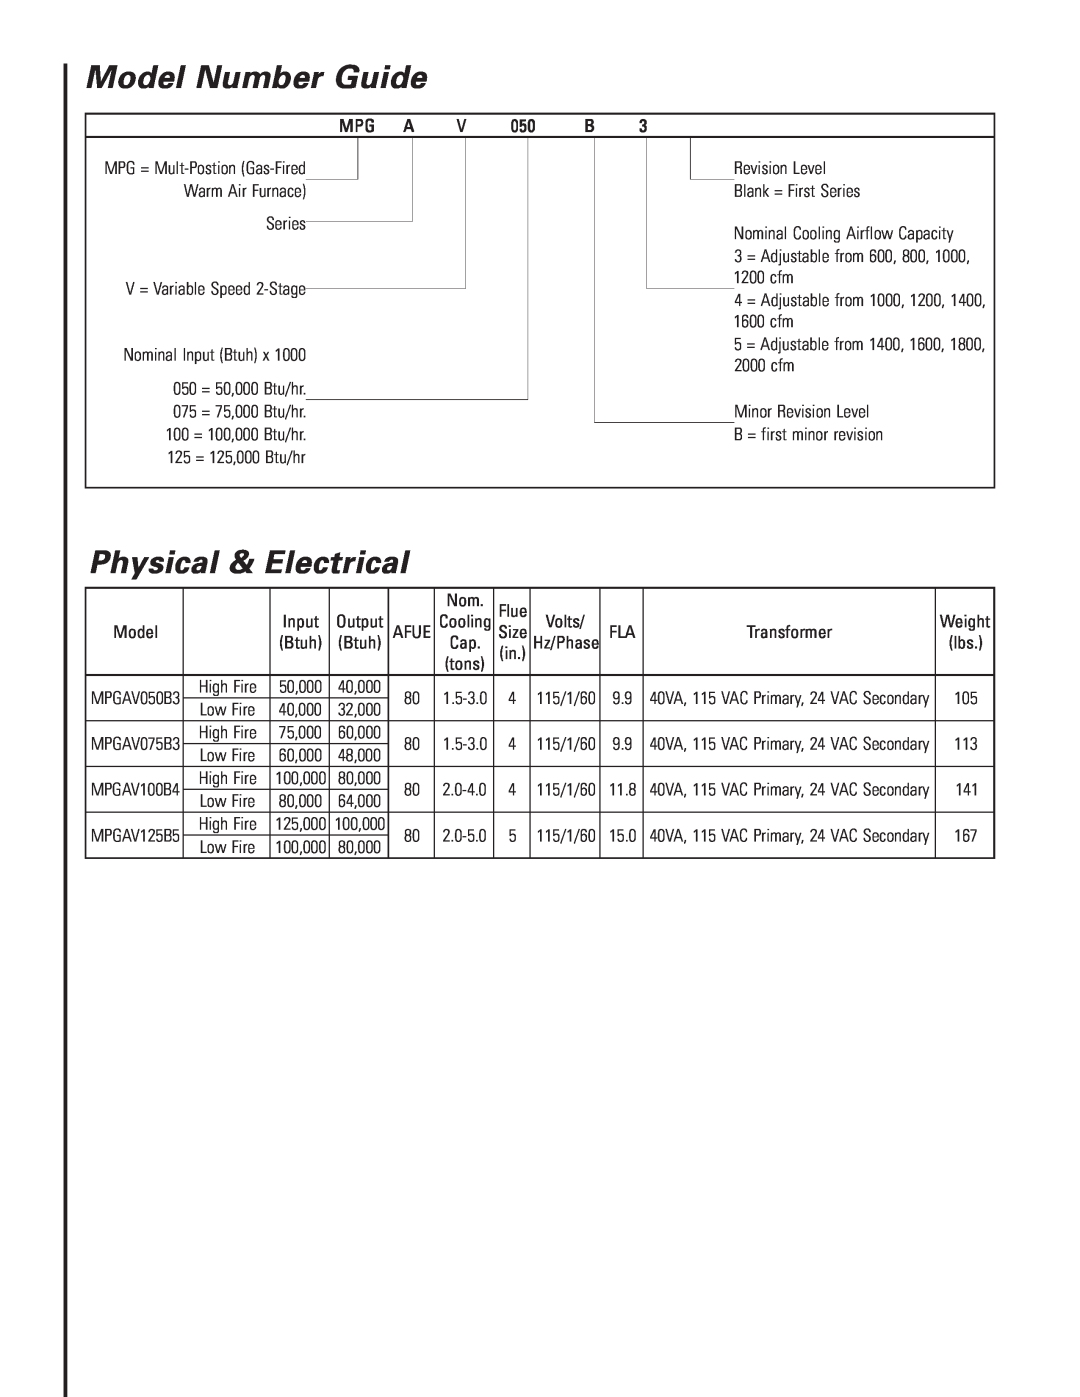 Ducane (HVAC) FITS-ALL 80V warranty Model Number Guide, Physical & Electrical, Mpg A 